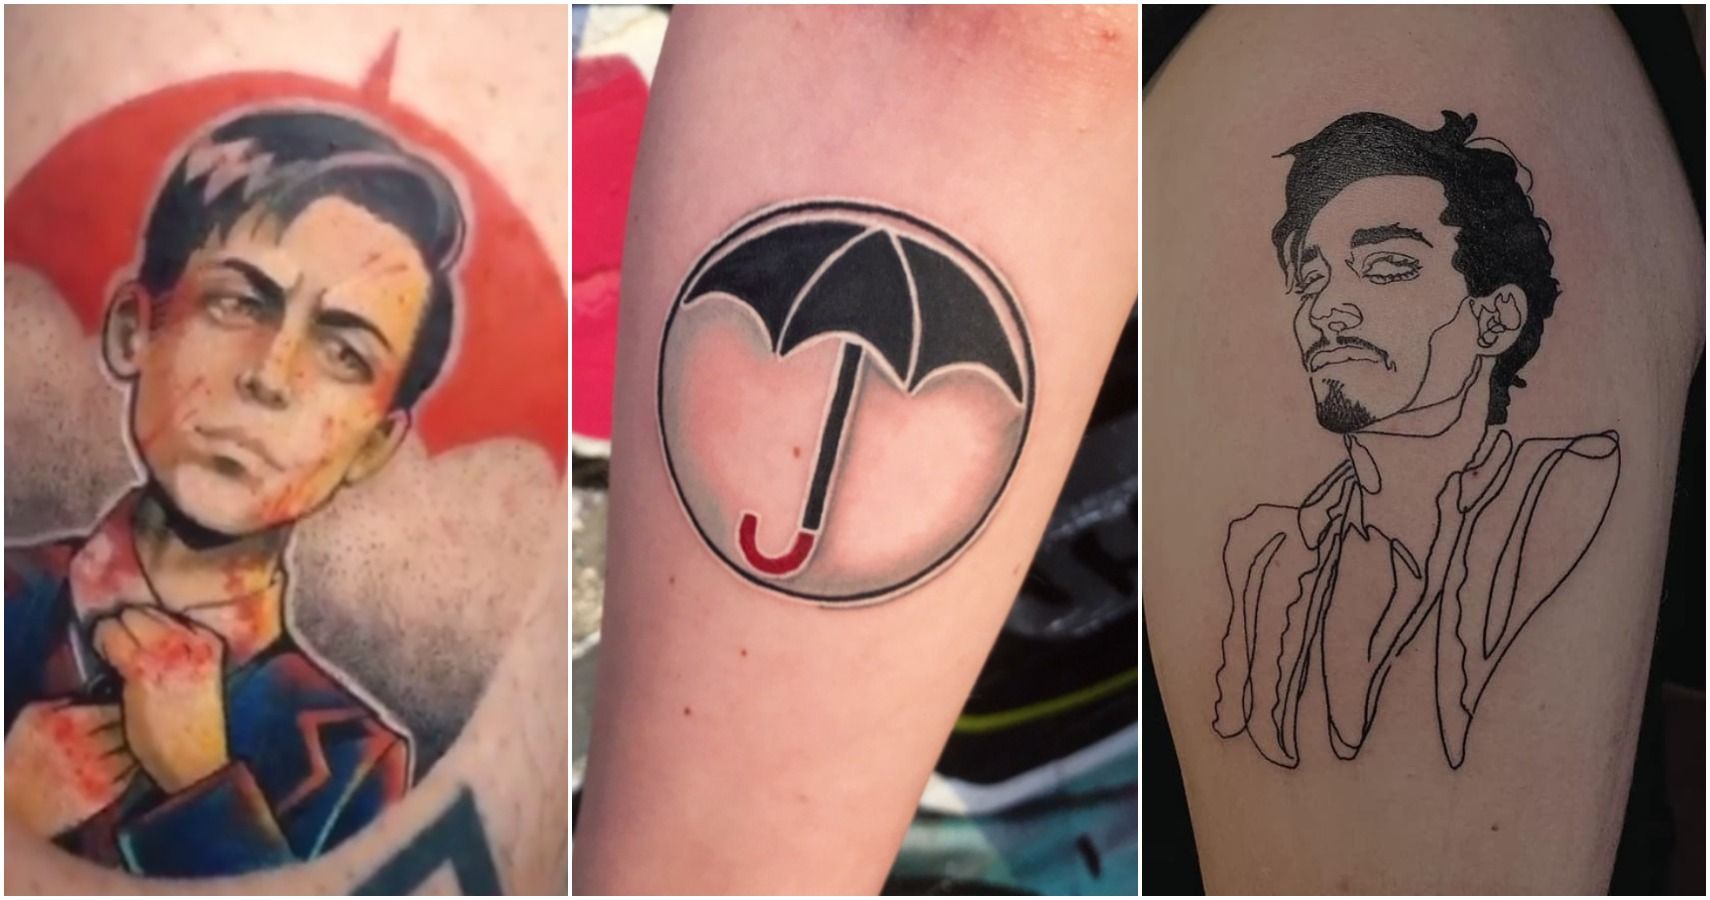 Umbrella academy tattoo ideas